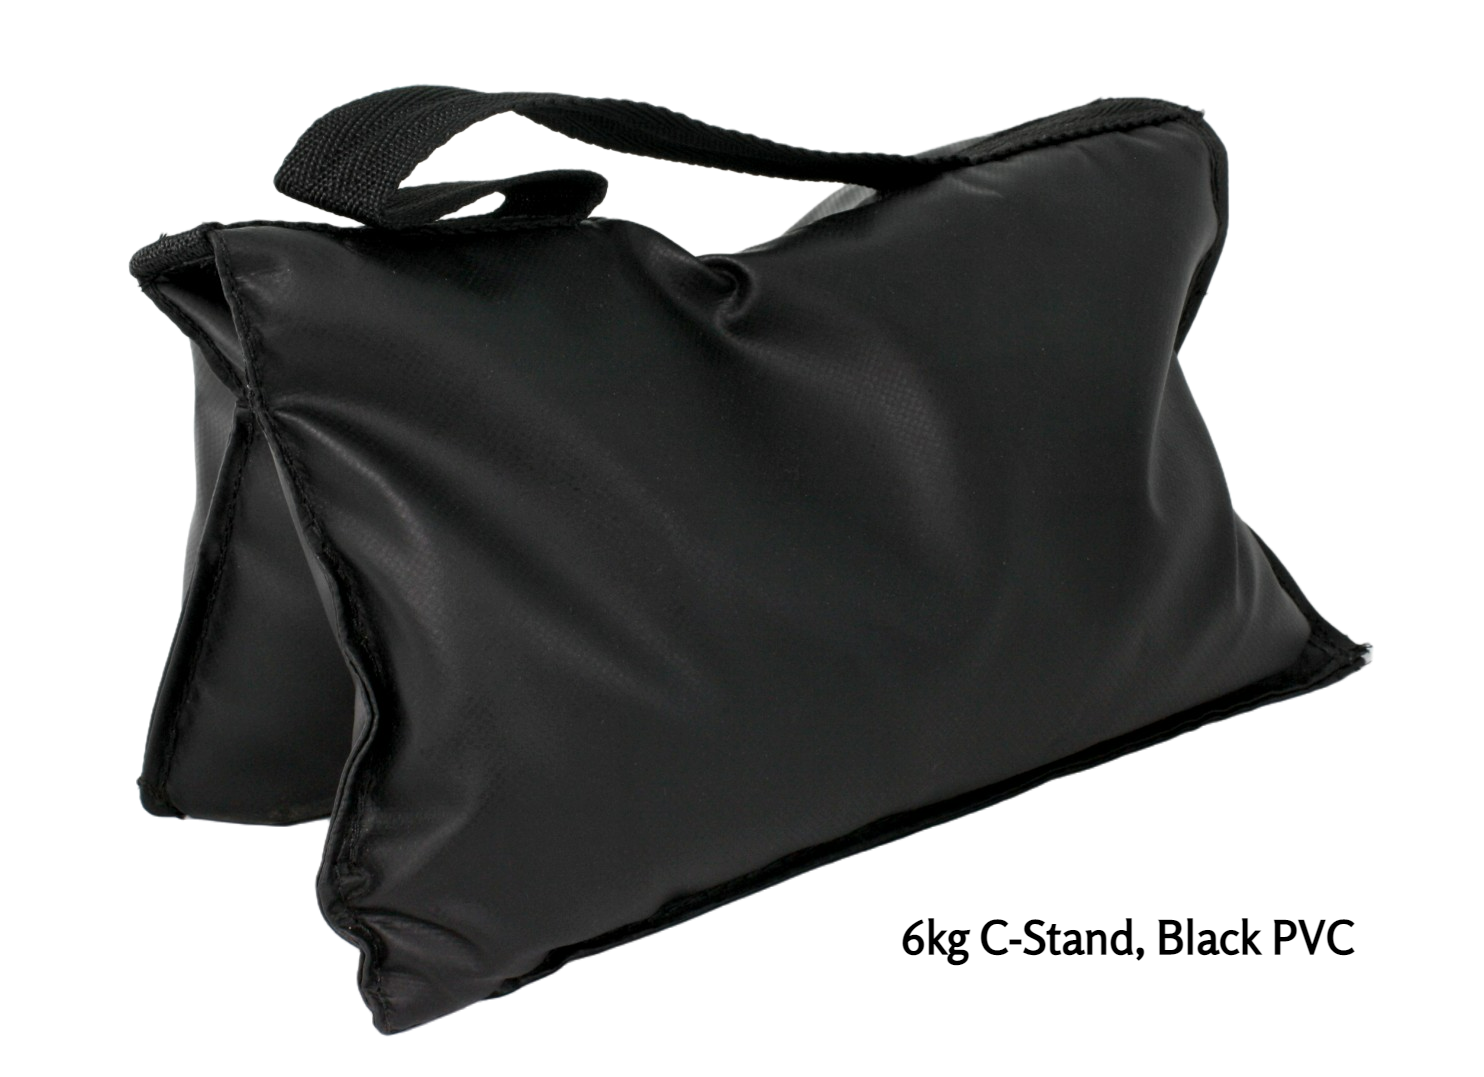 A 6kg C-stand sandbag in black PVC fabric